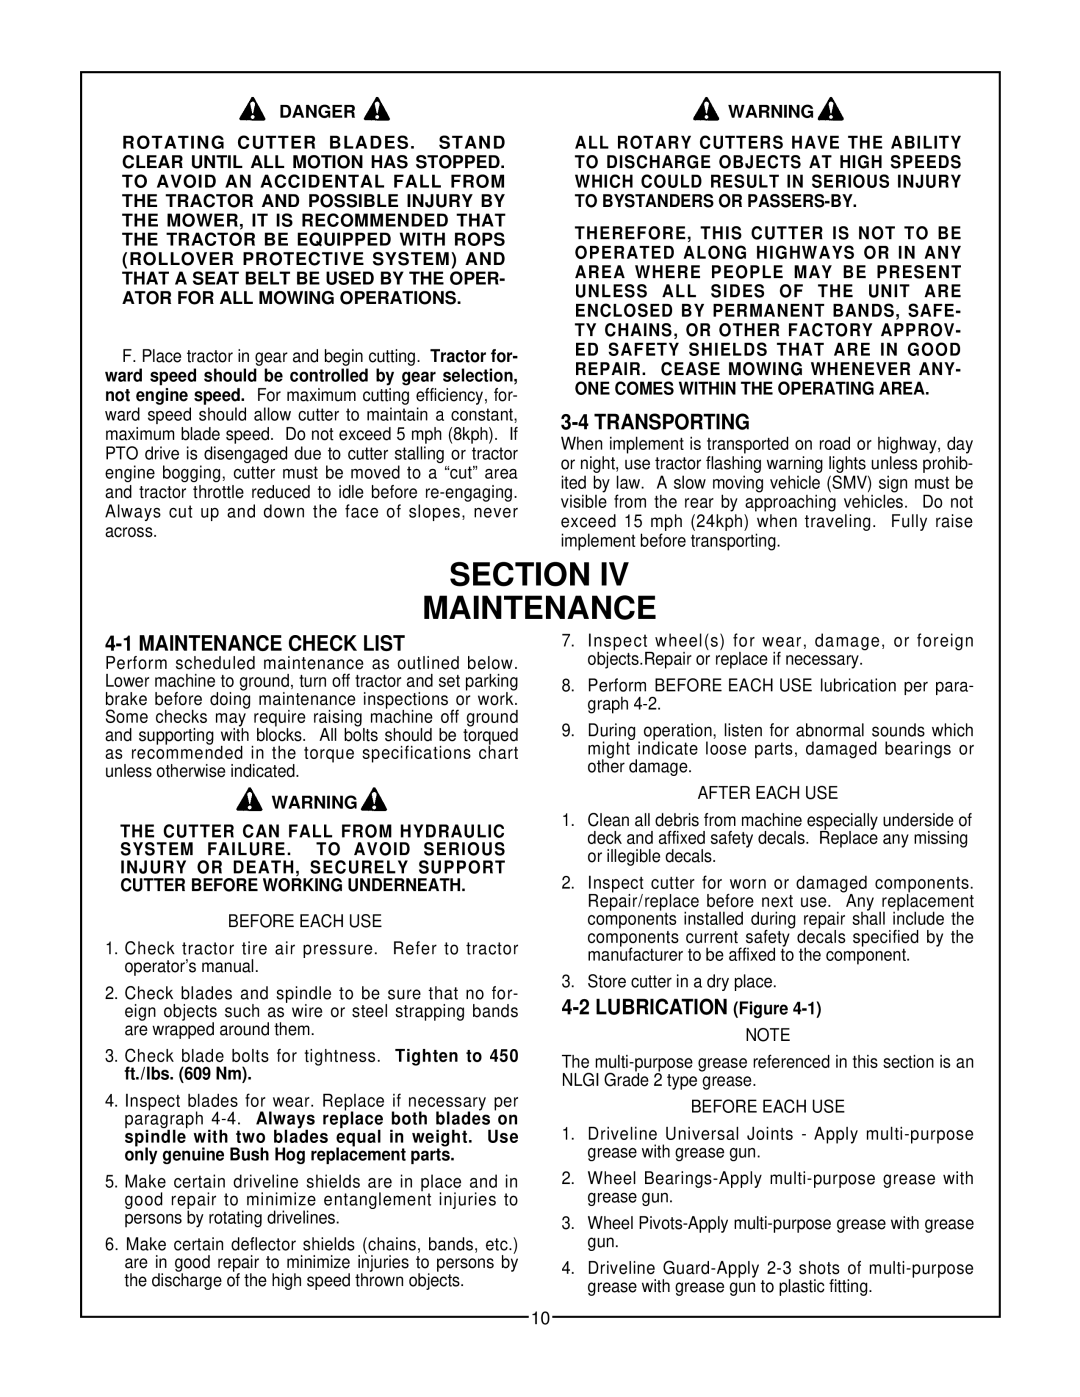 Bush Hog 305, 306 manual 4-1MAINTENANCE CHECK LIST, 3-4TRANSPORTING, Section, 4-2LUBRICATION, Maintenance 